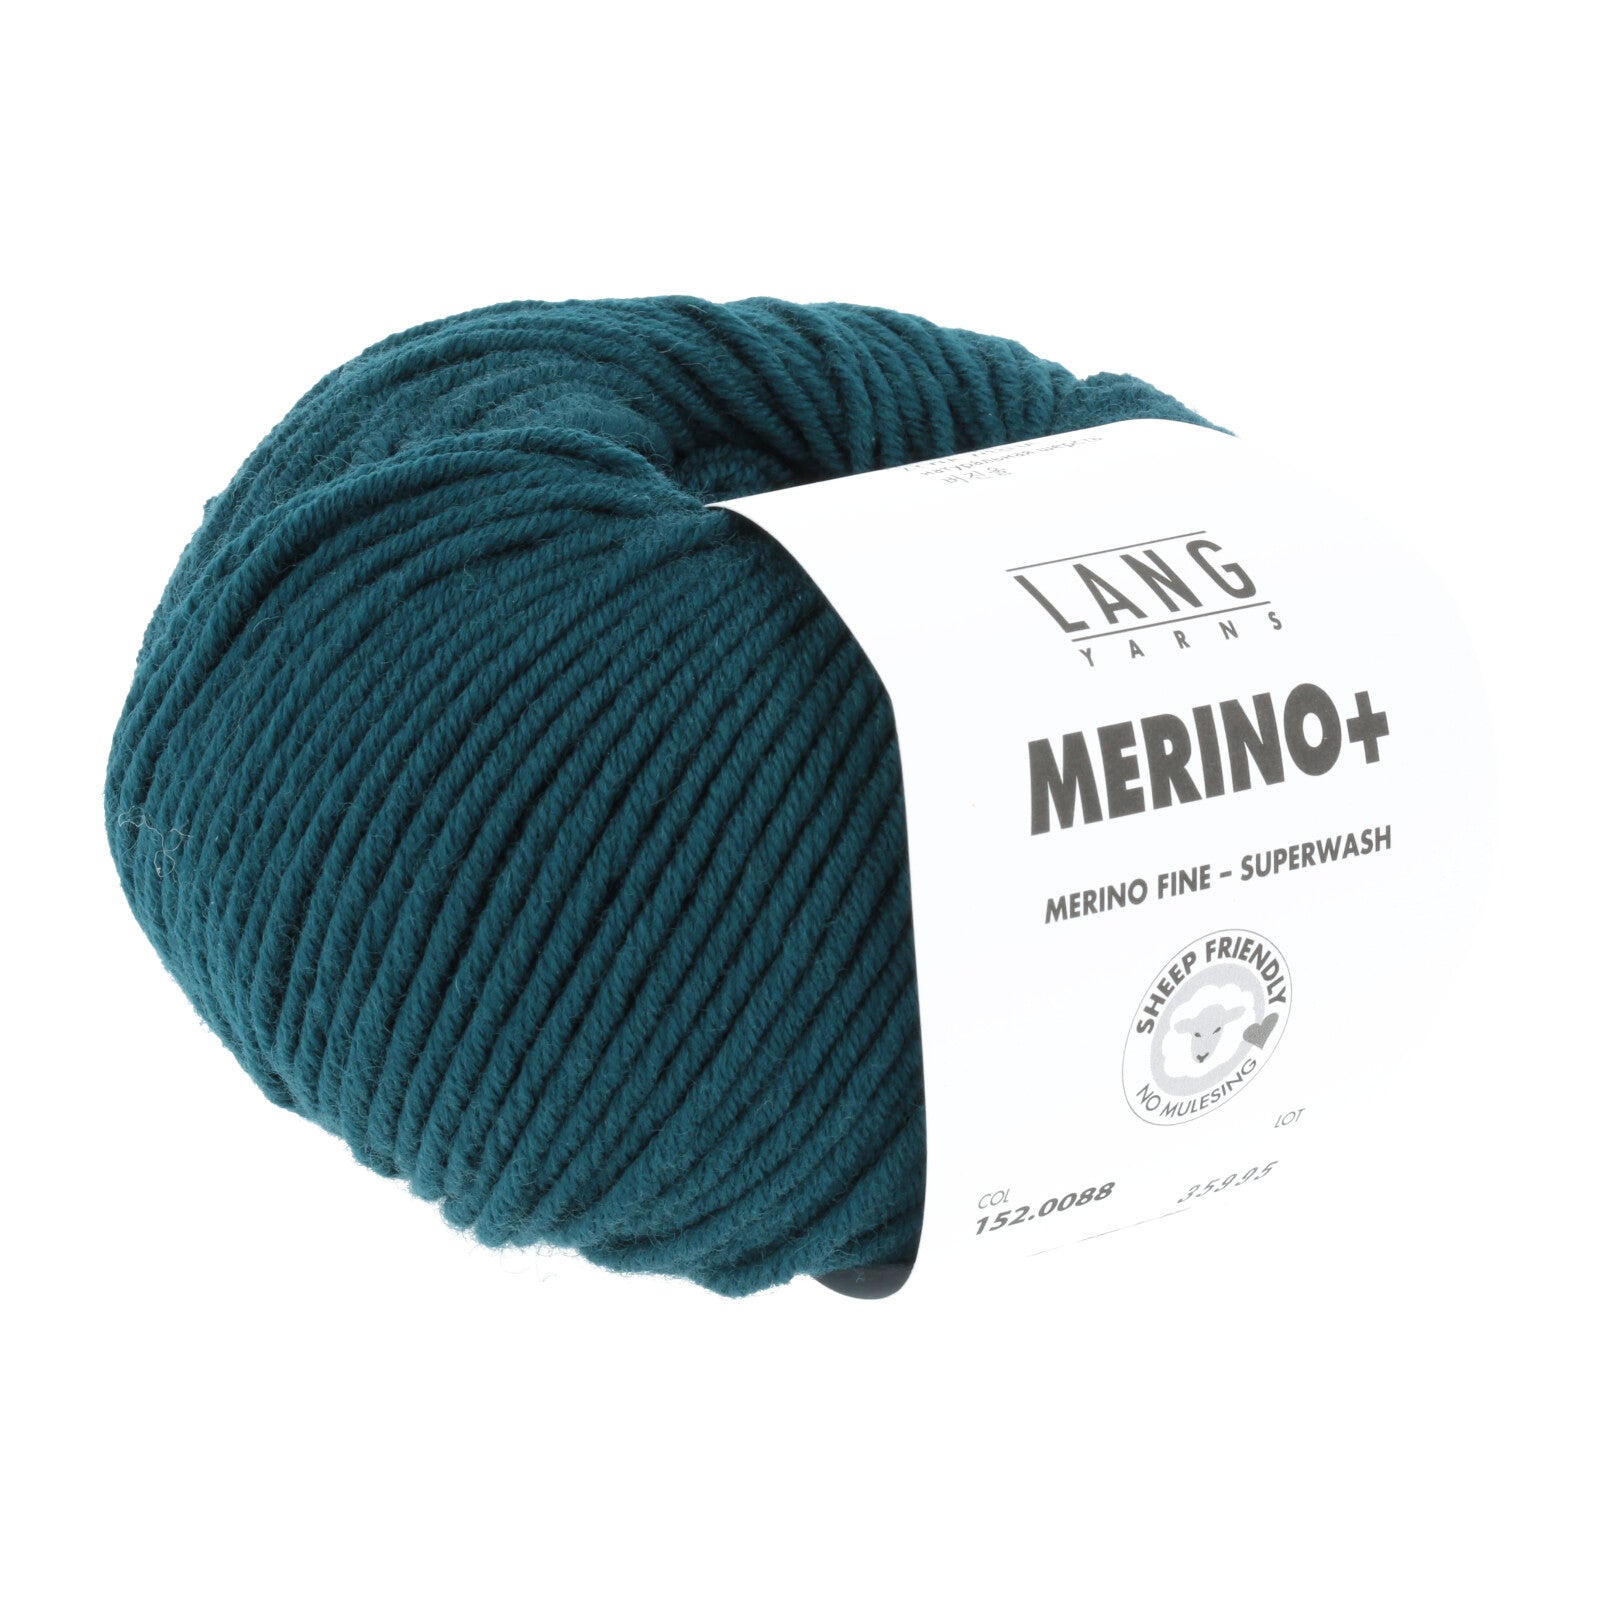 Merino+ Hat Kit